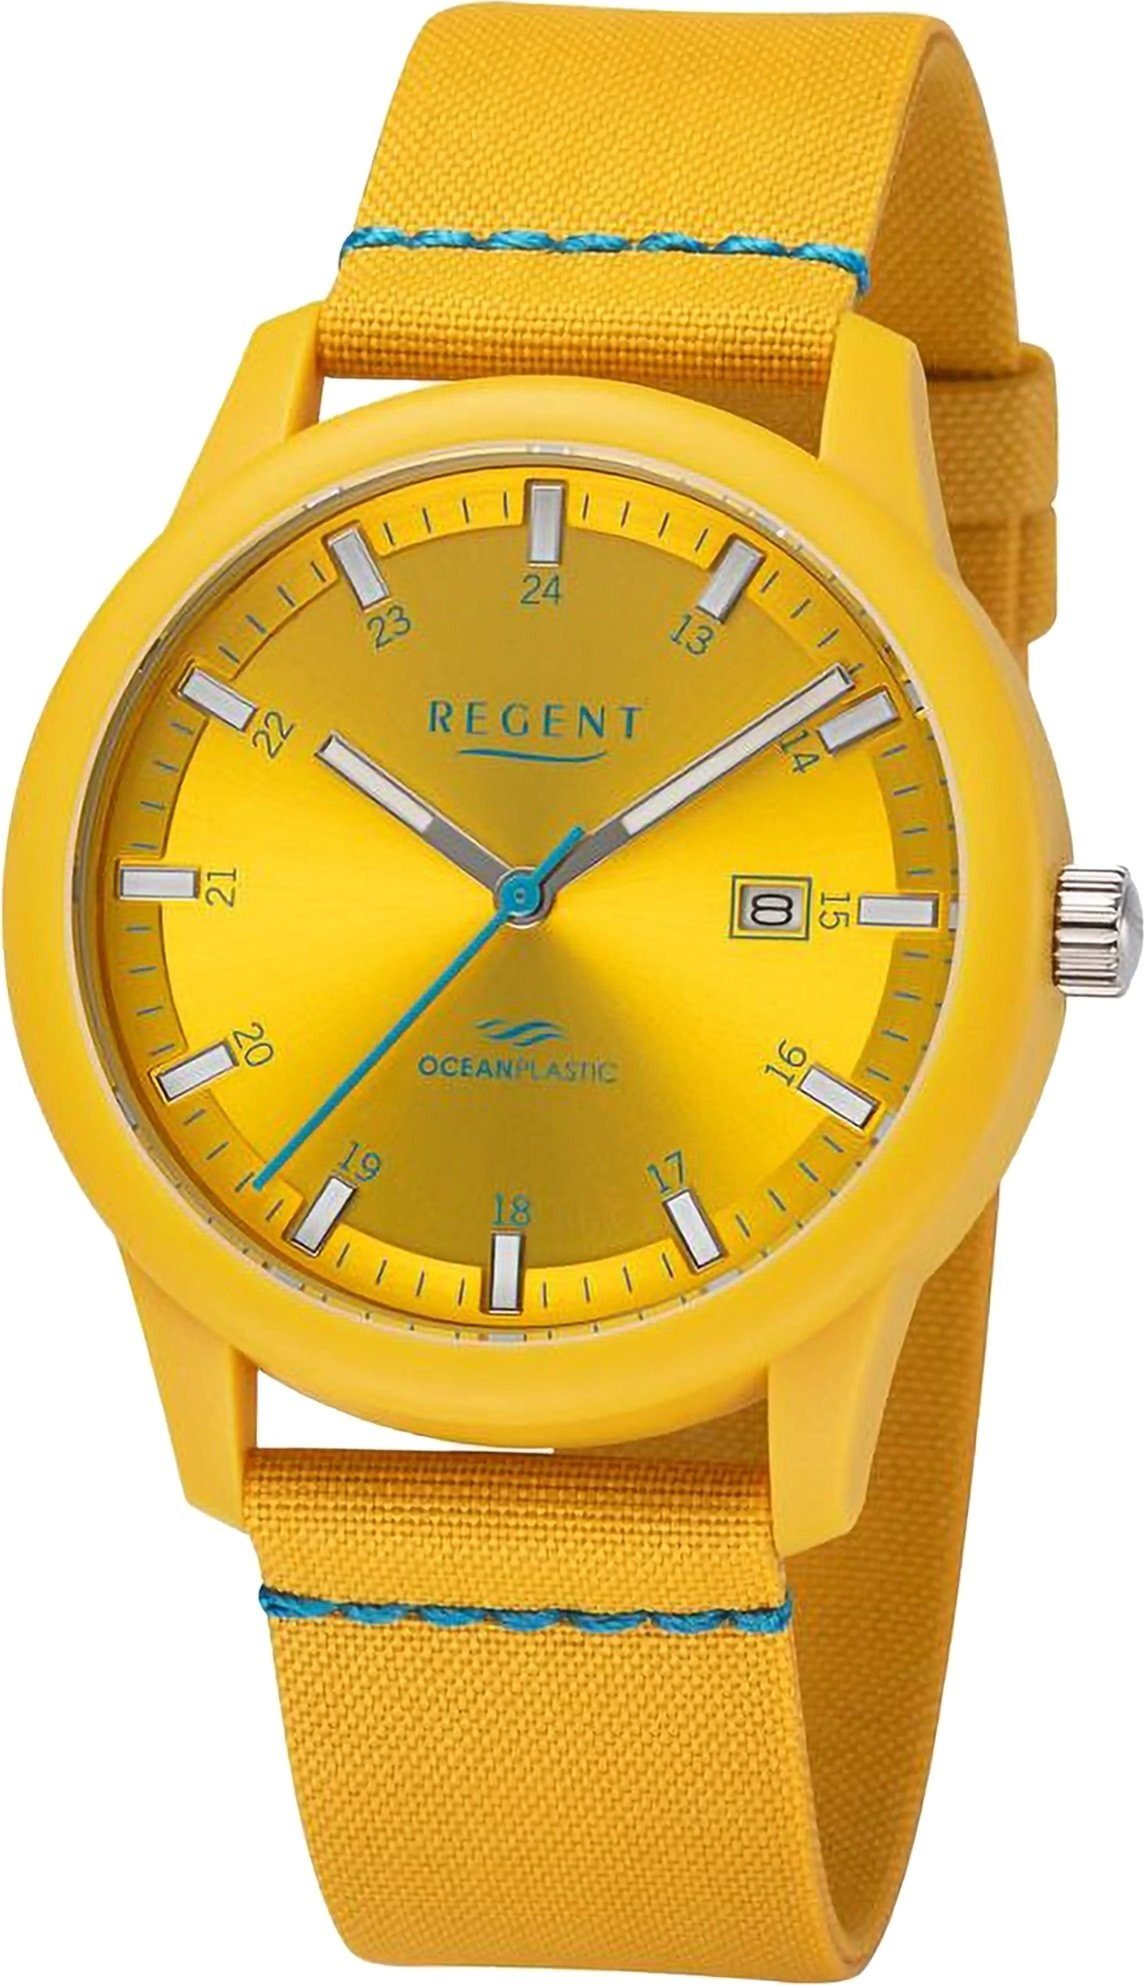 OTTO Gelbe Herren | online Armbanduhren kaufen